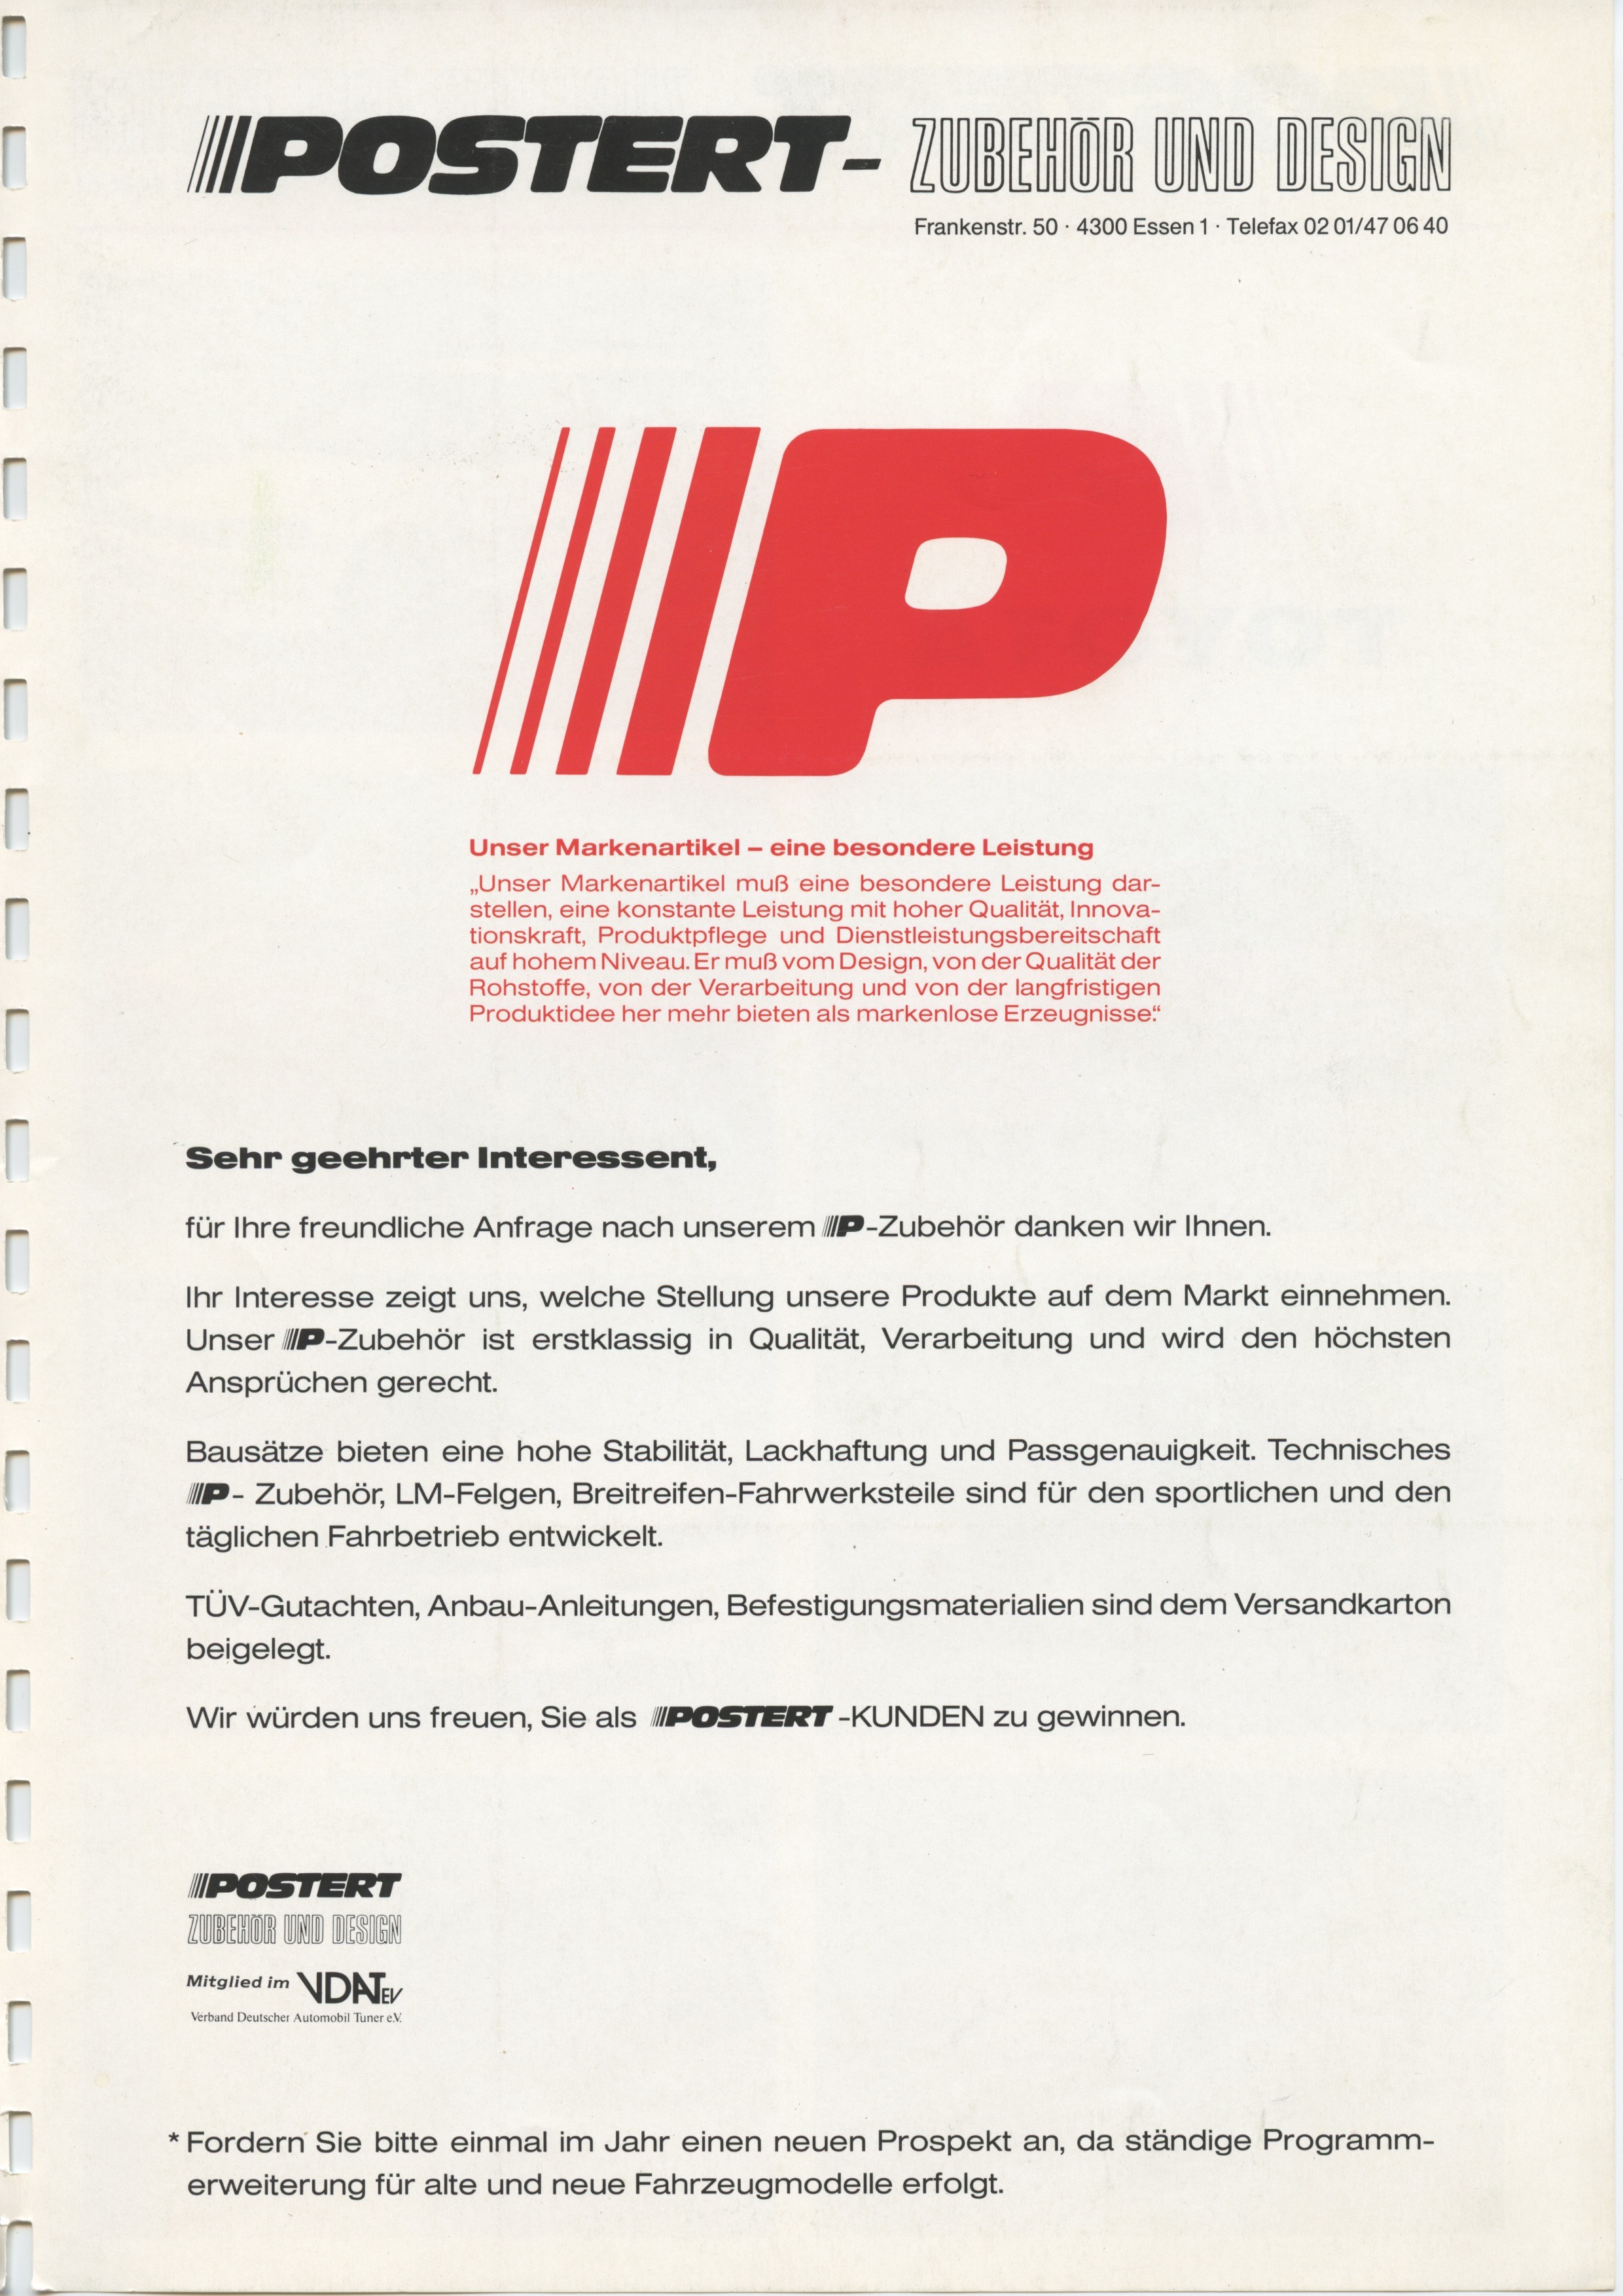 postert-catalogue-january-1988-page-01